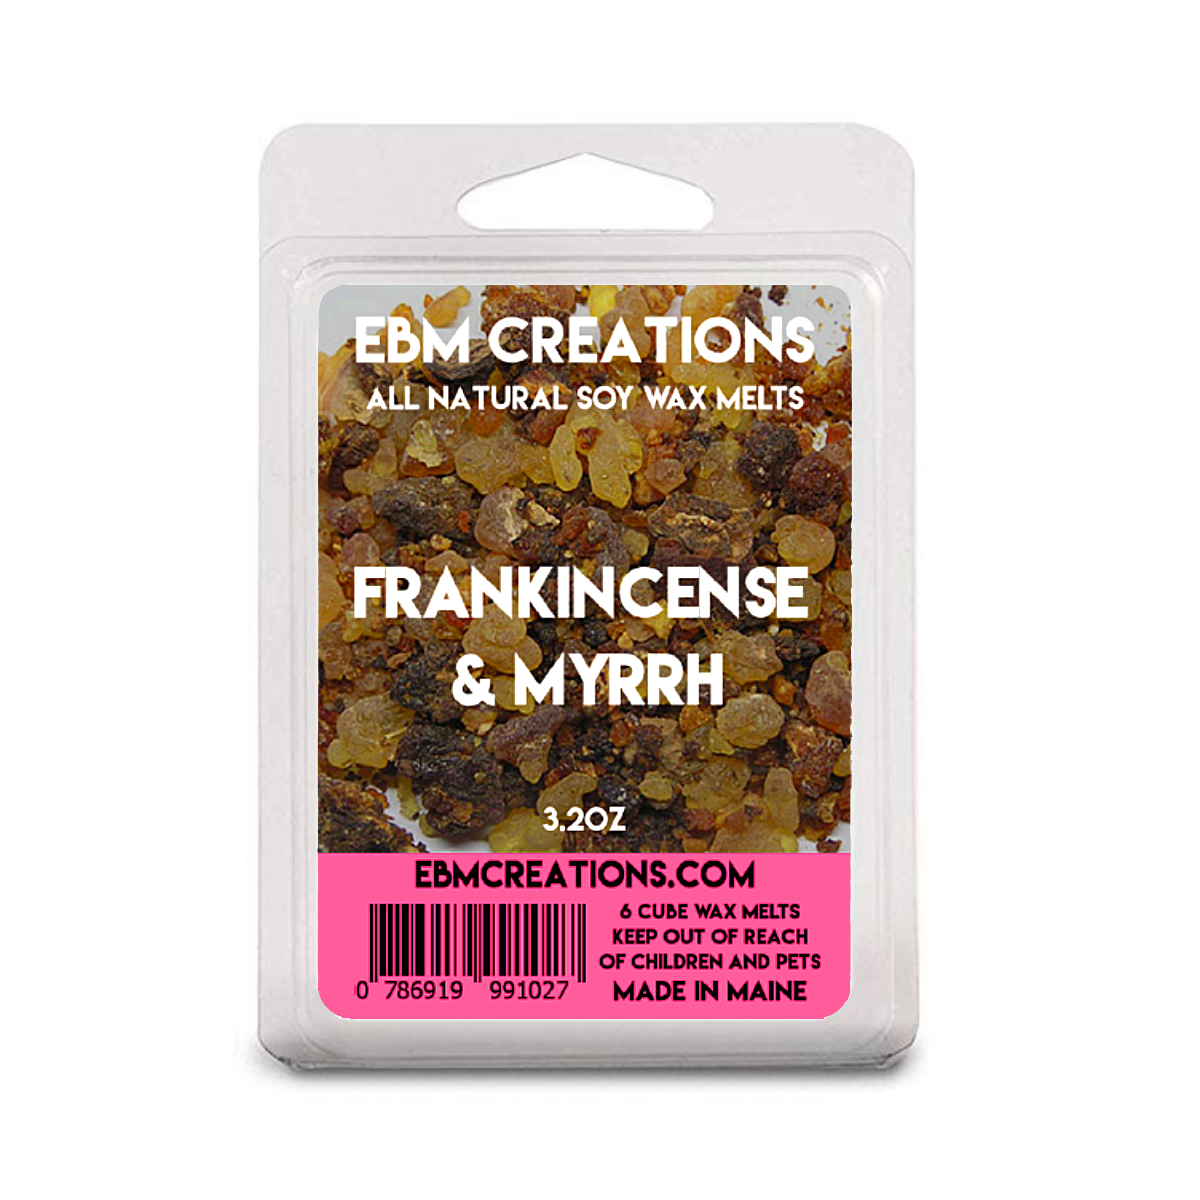 Frankincense & Myrrh - 3.2 oz Clamshell